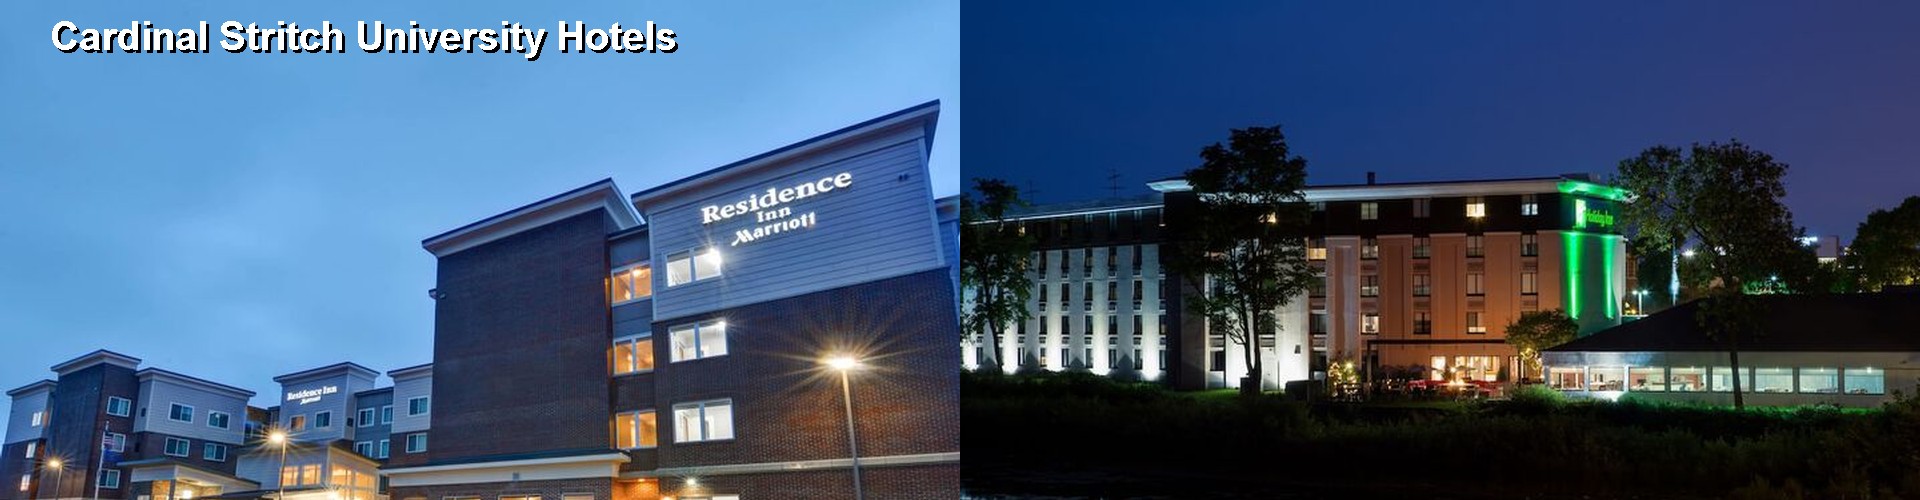 4 Best Hotels near Cardinal Stritch University